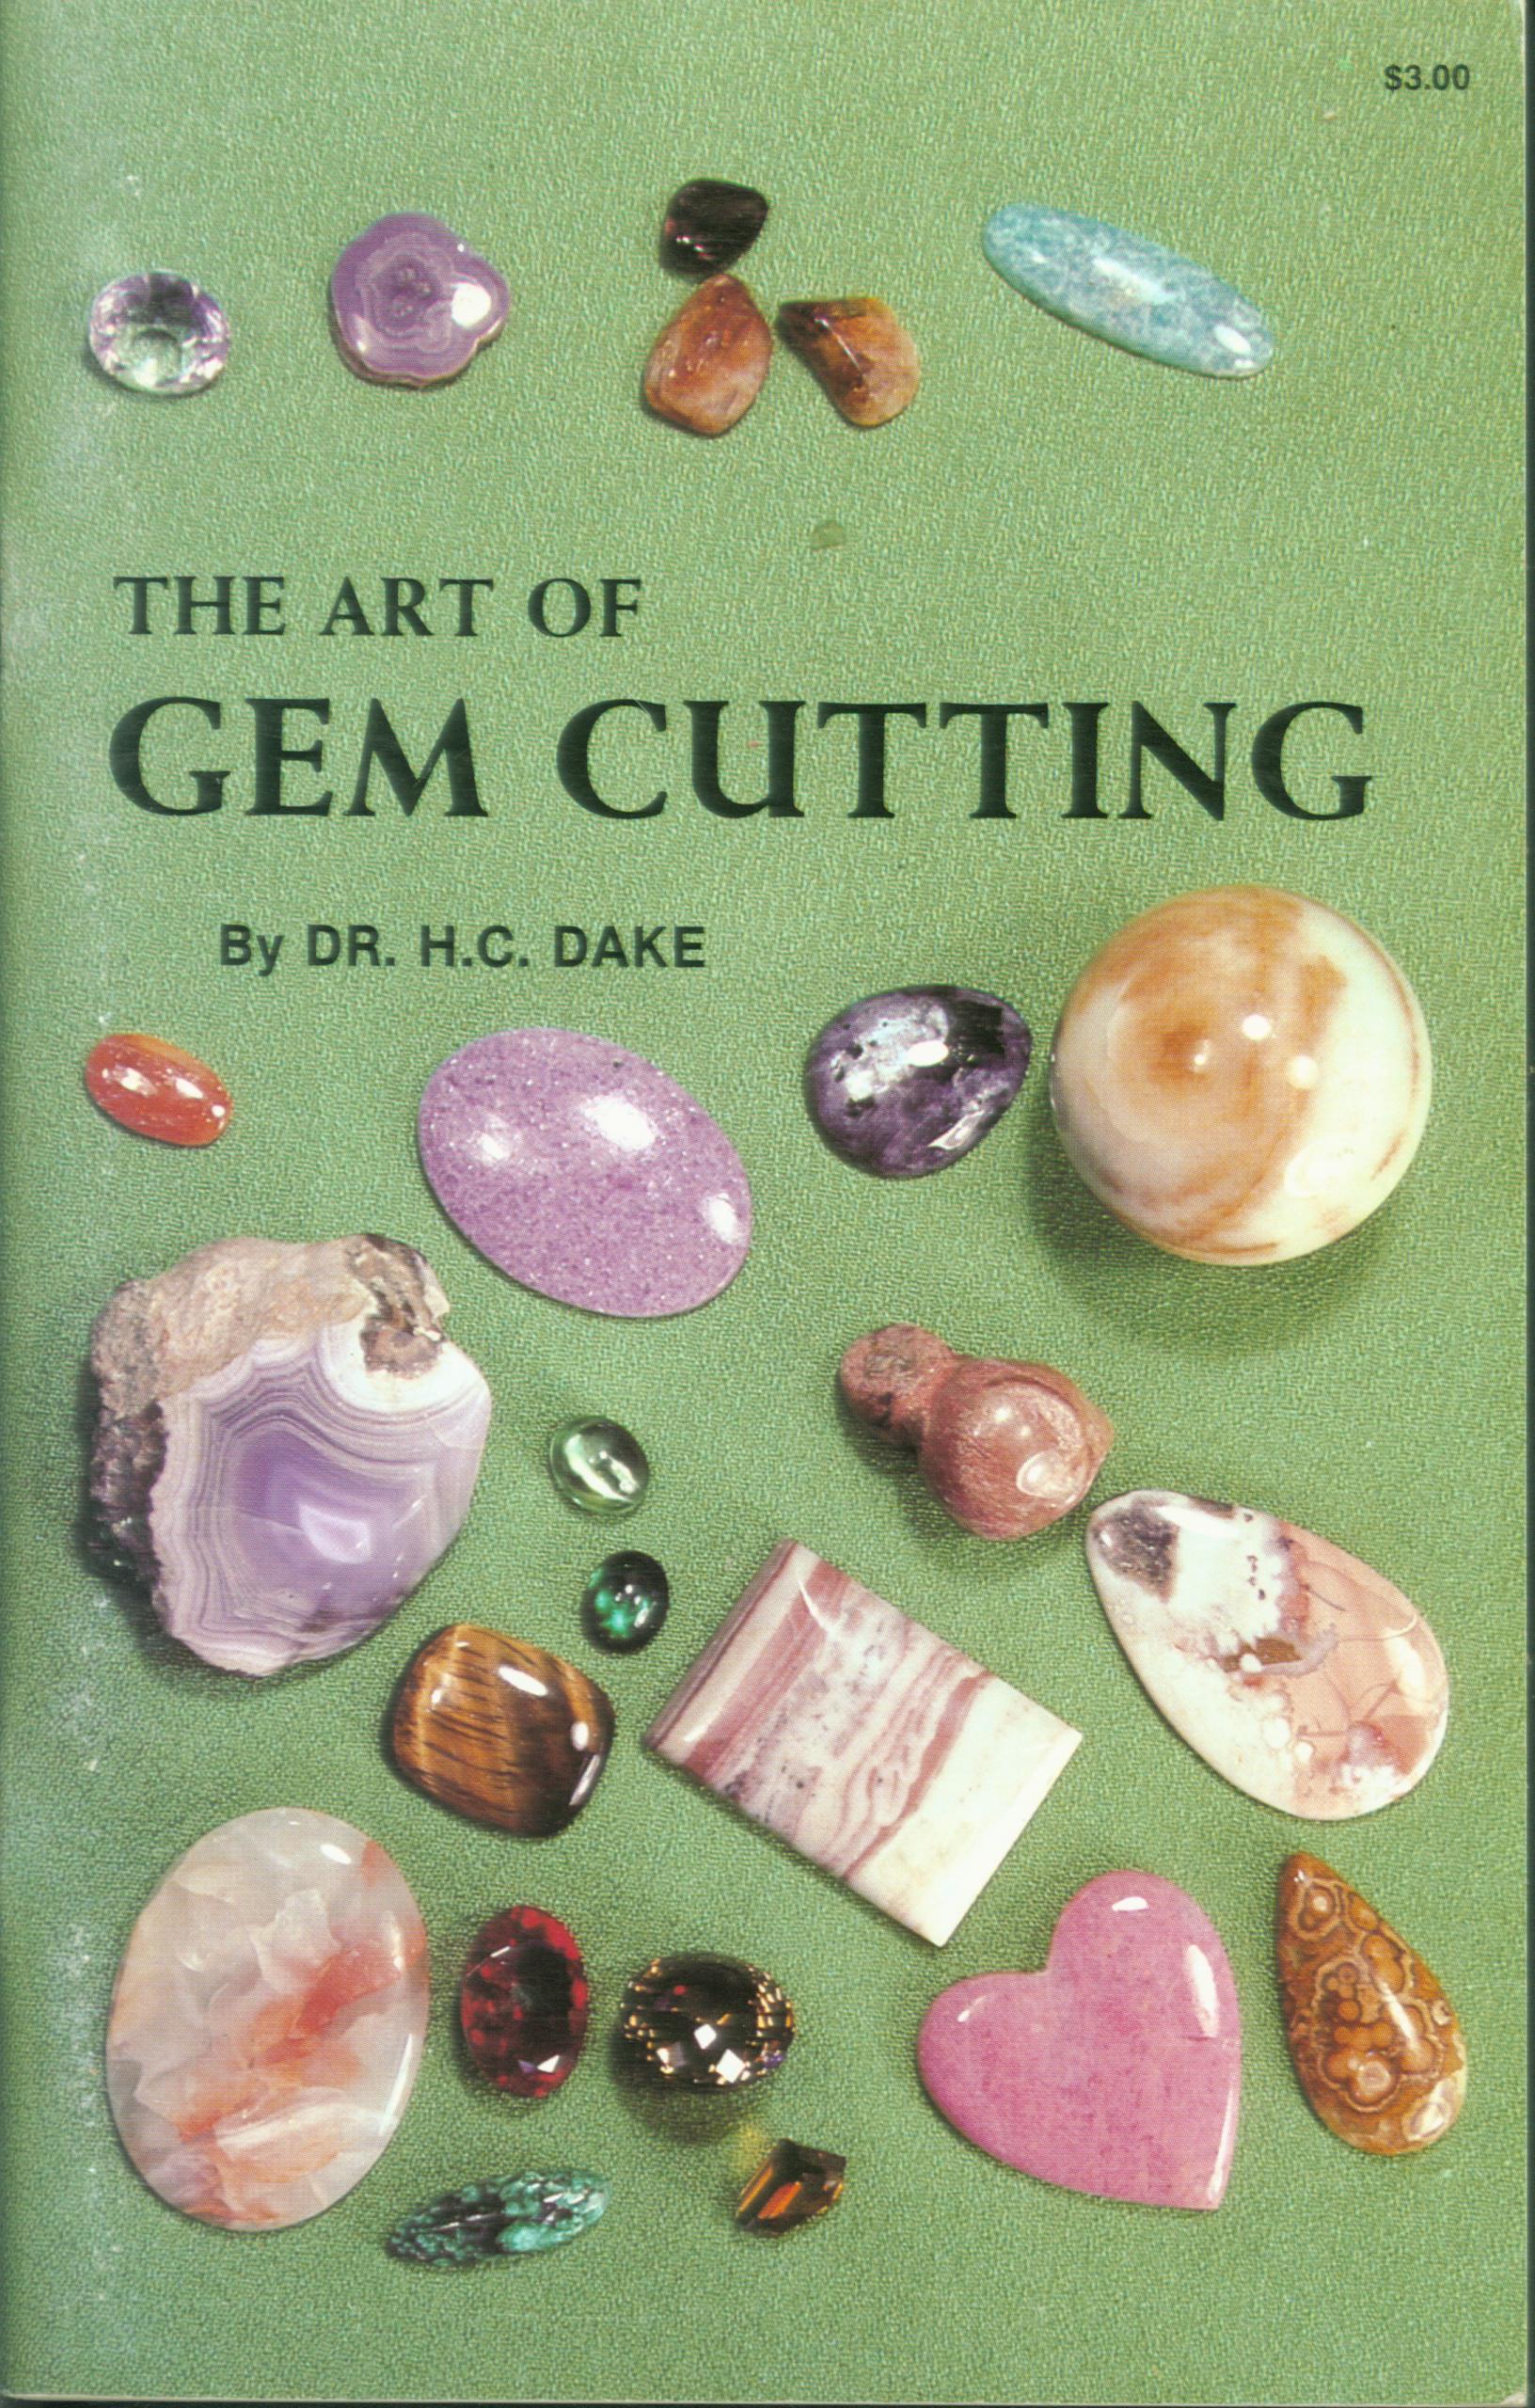 THE ART OF GEM CUTTING. 